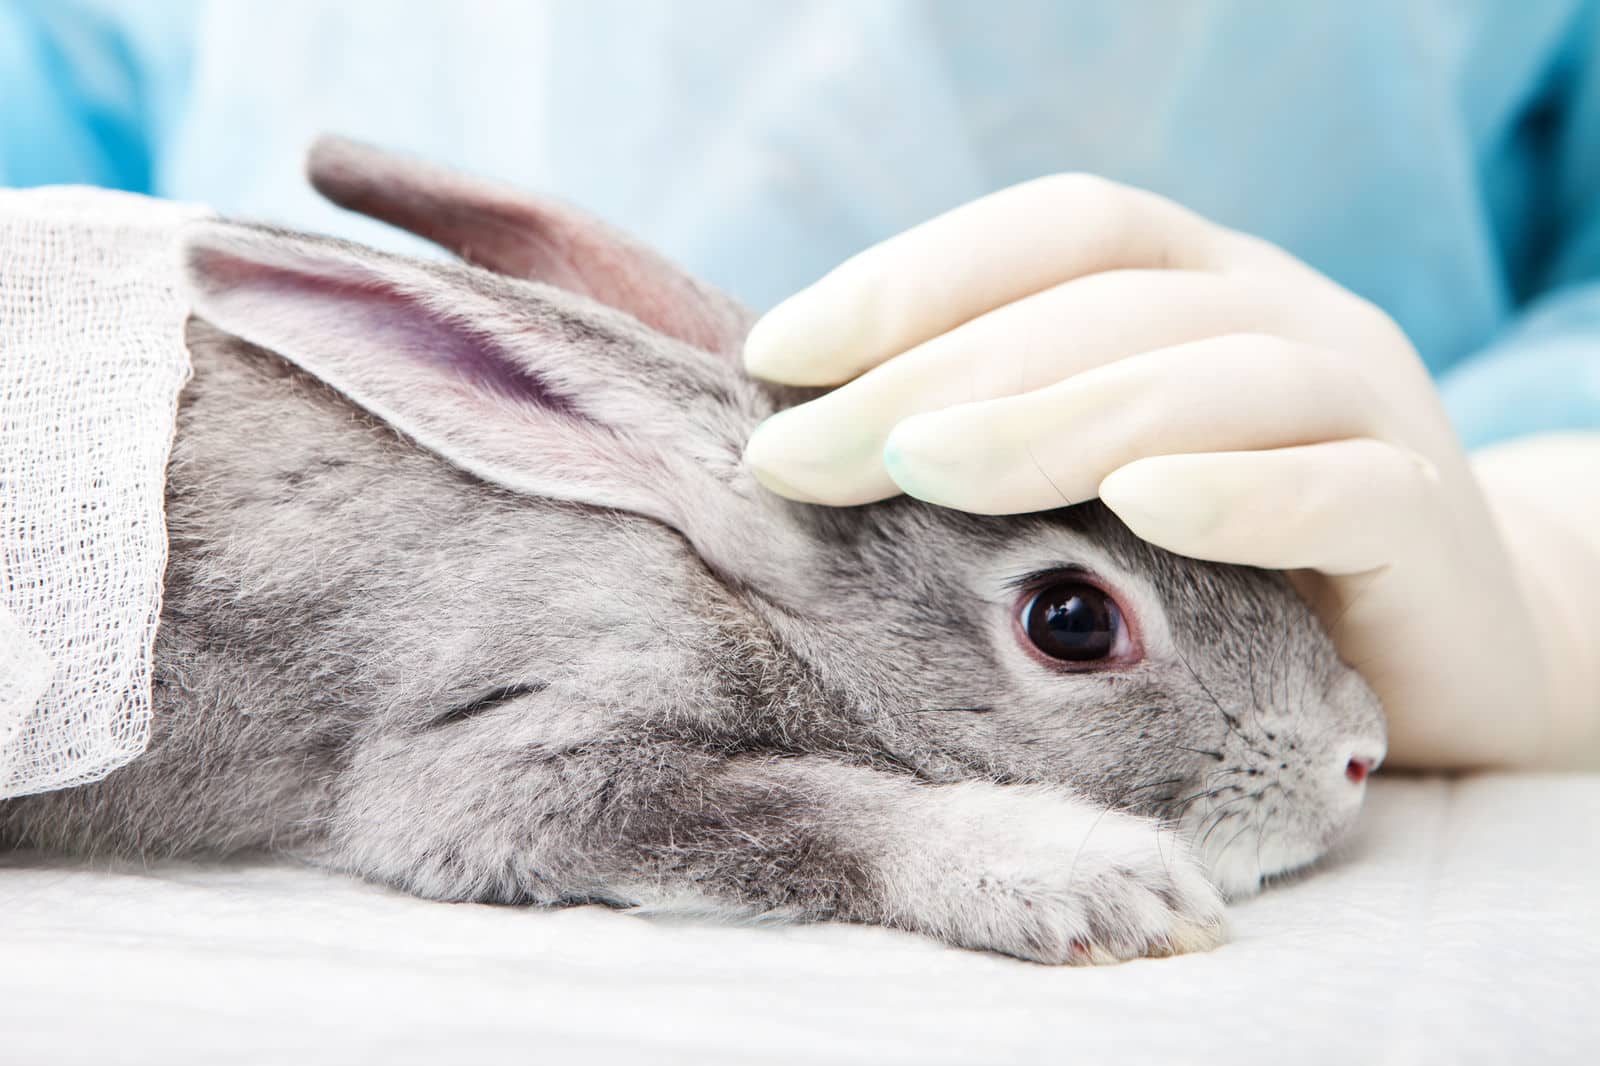 Animals in Cosmetics Testing - Humane Society International (HSI)